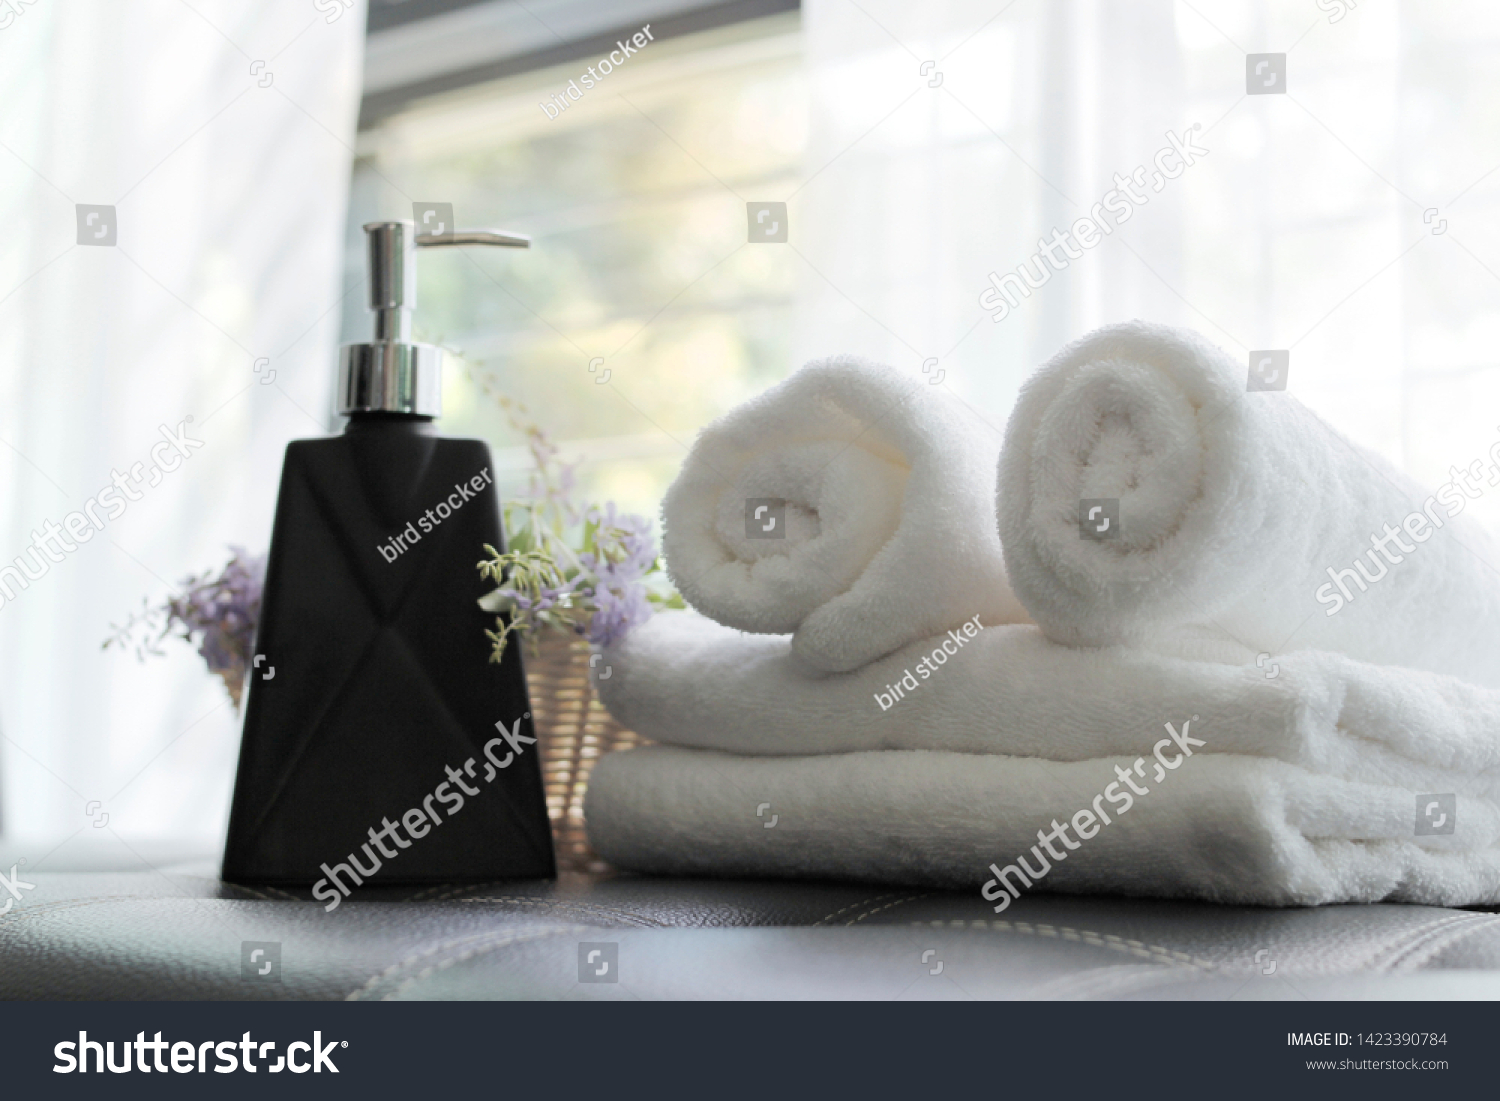 stock-photo-liquid-soap-bottle-white-towel-on-basket-in-bathroom-1423390784.jpg